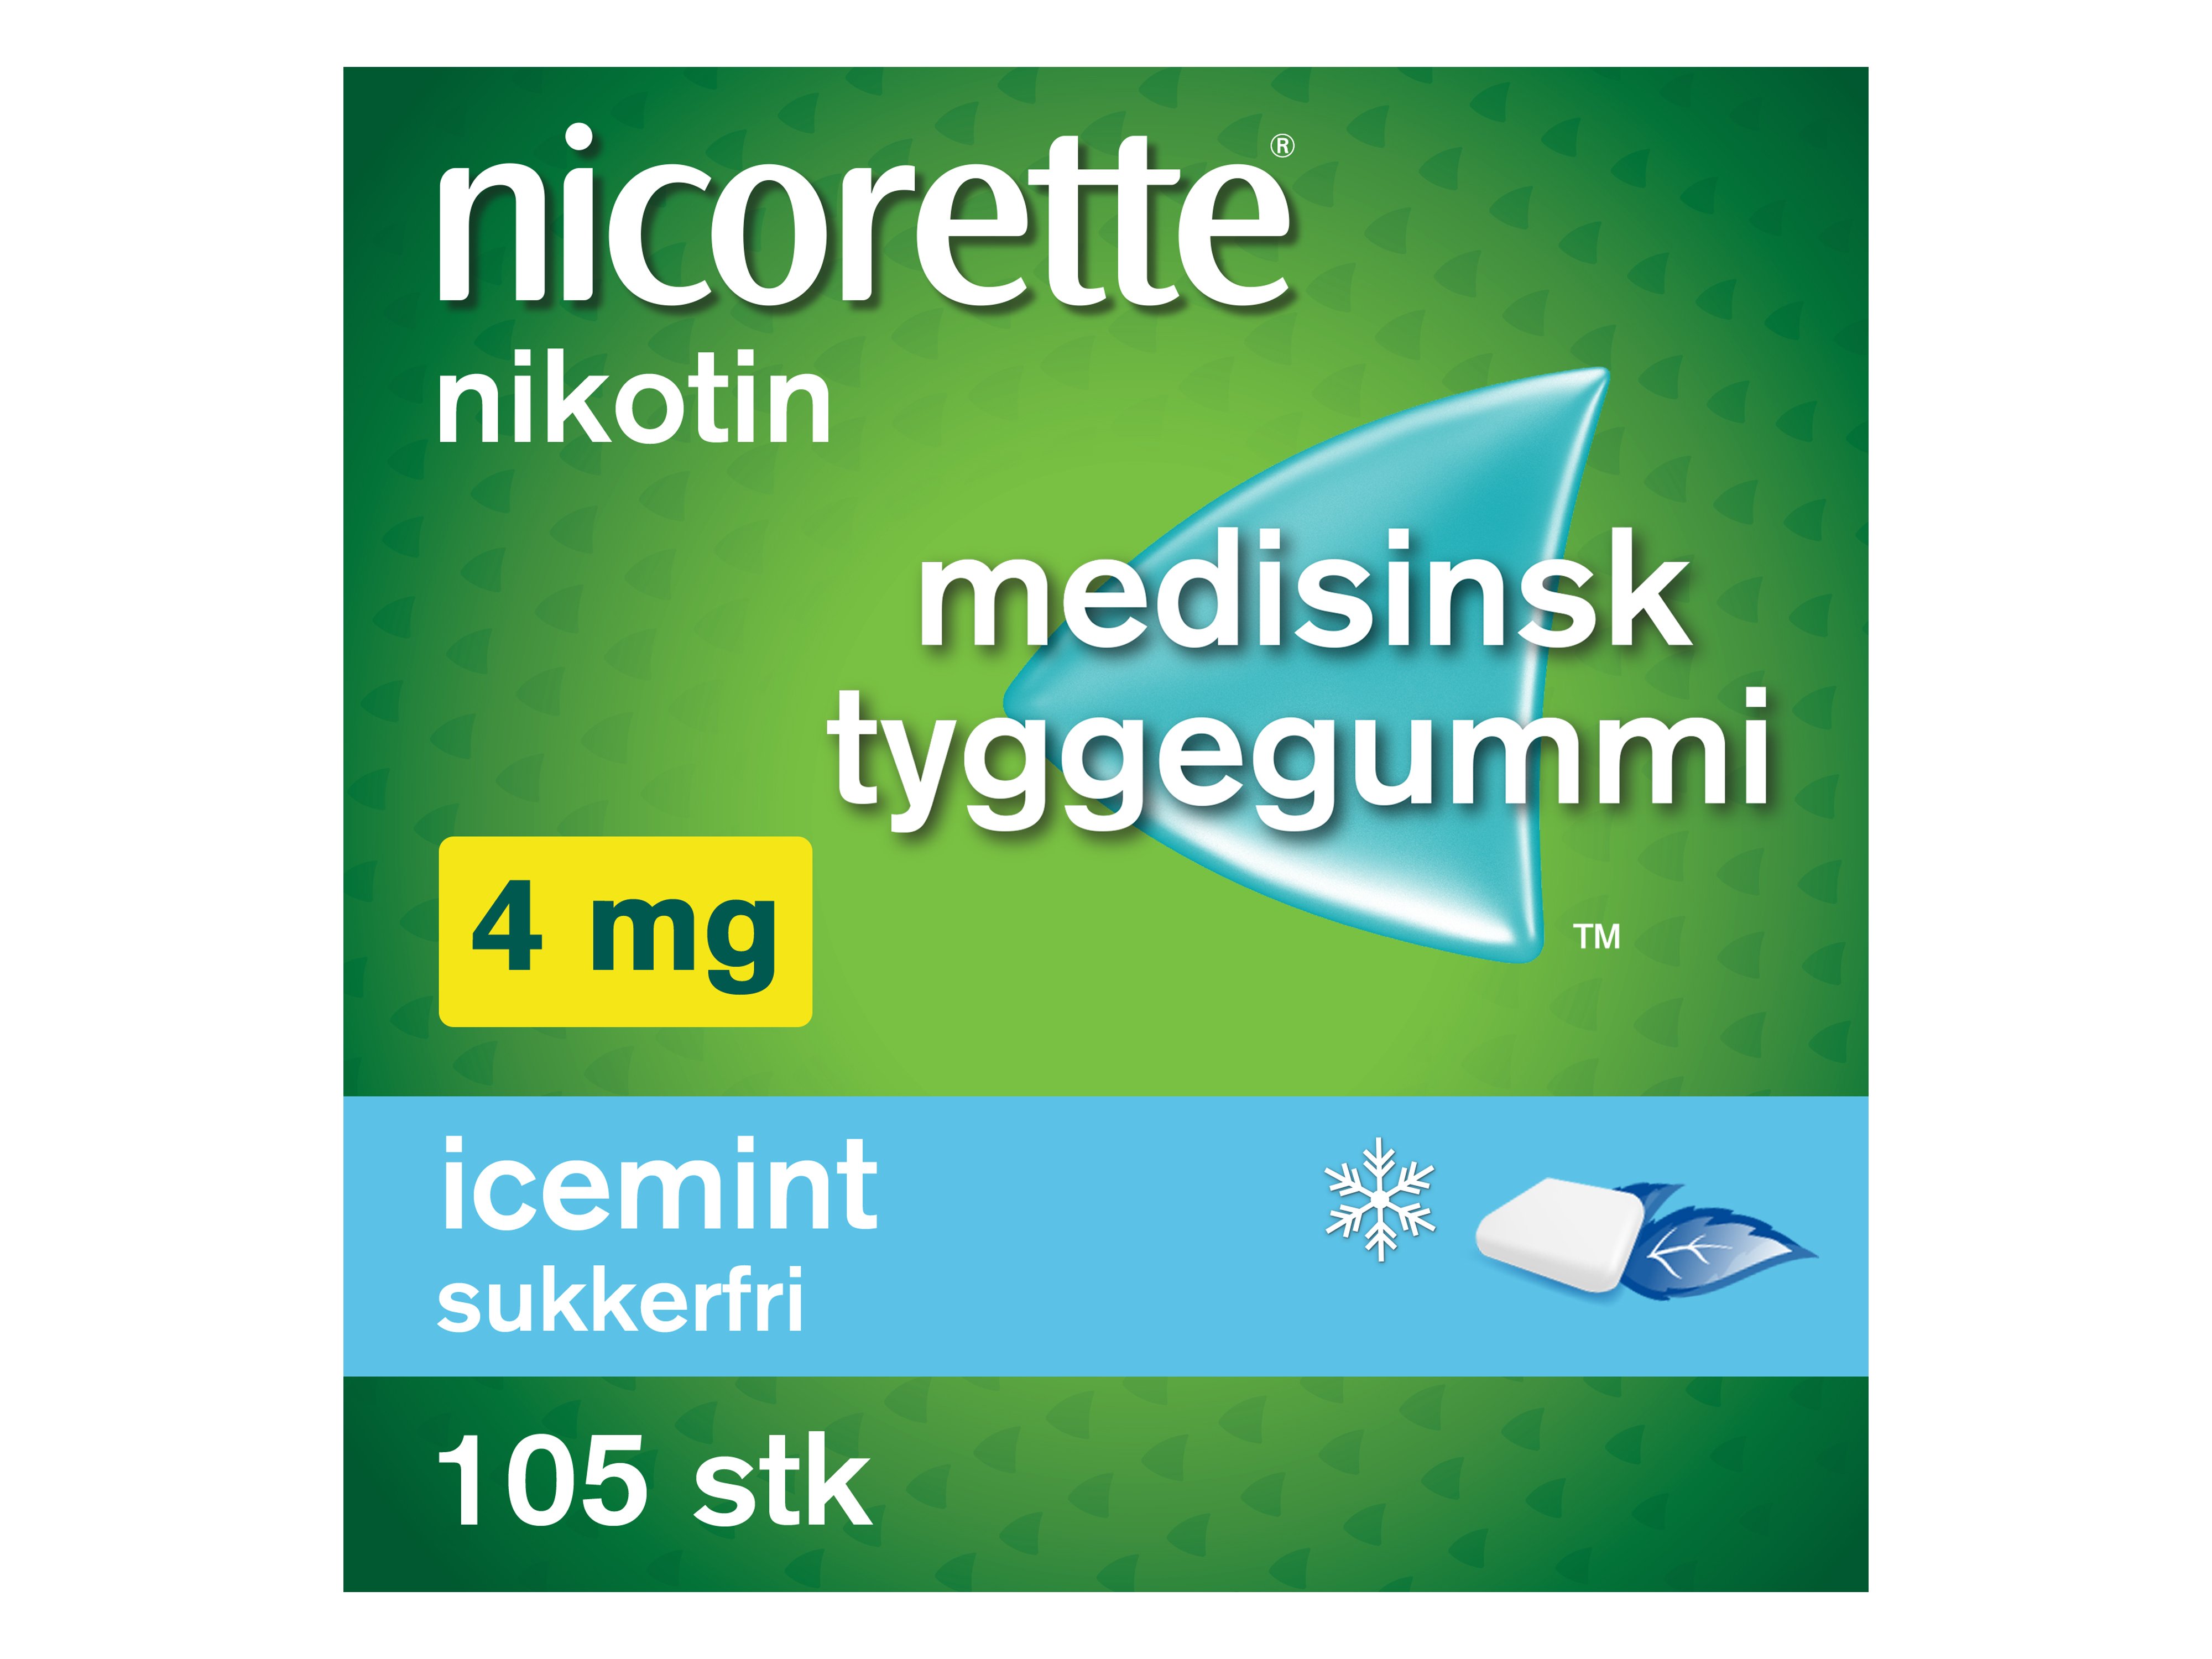 Nicorette 4 mg tyggegummi, Icemint, 105 stk.